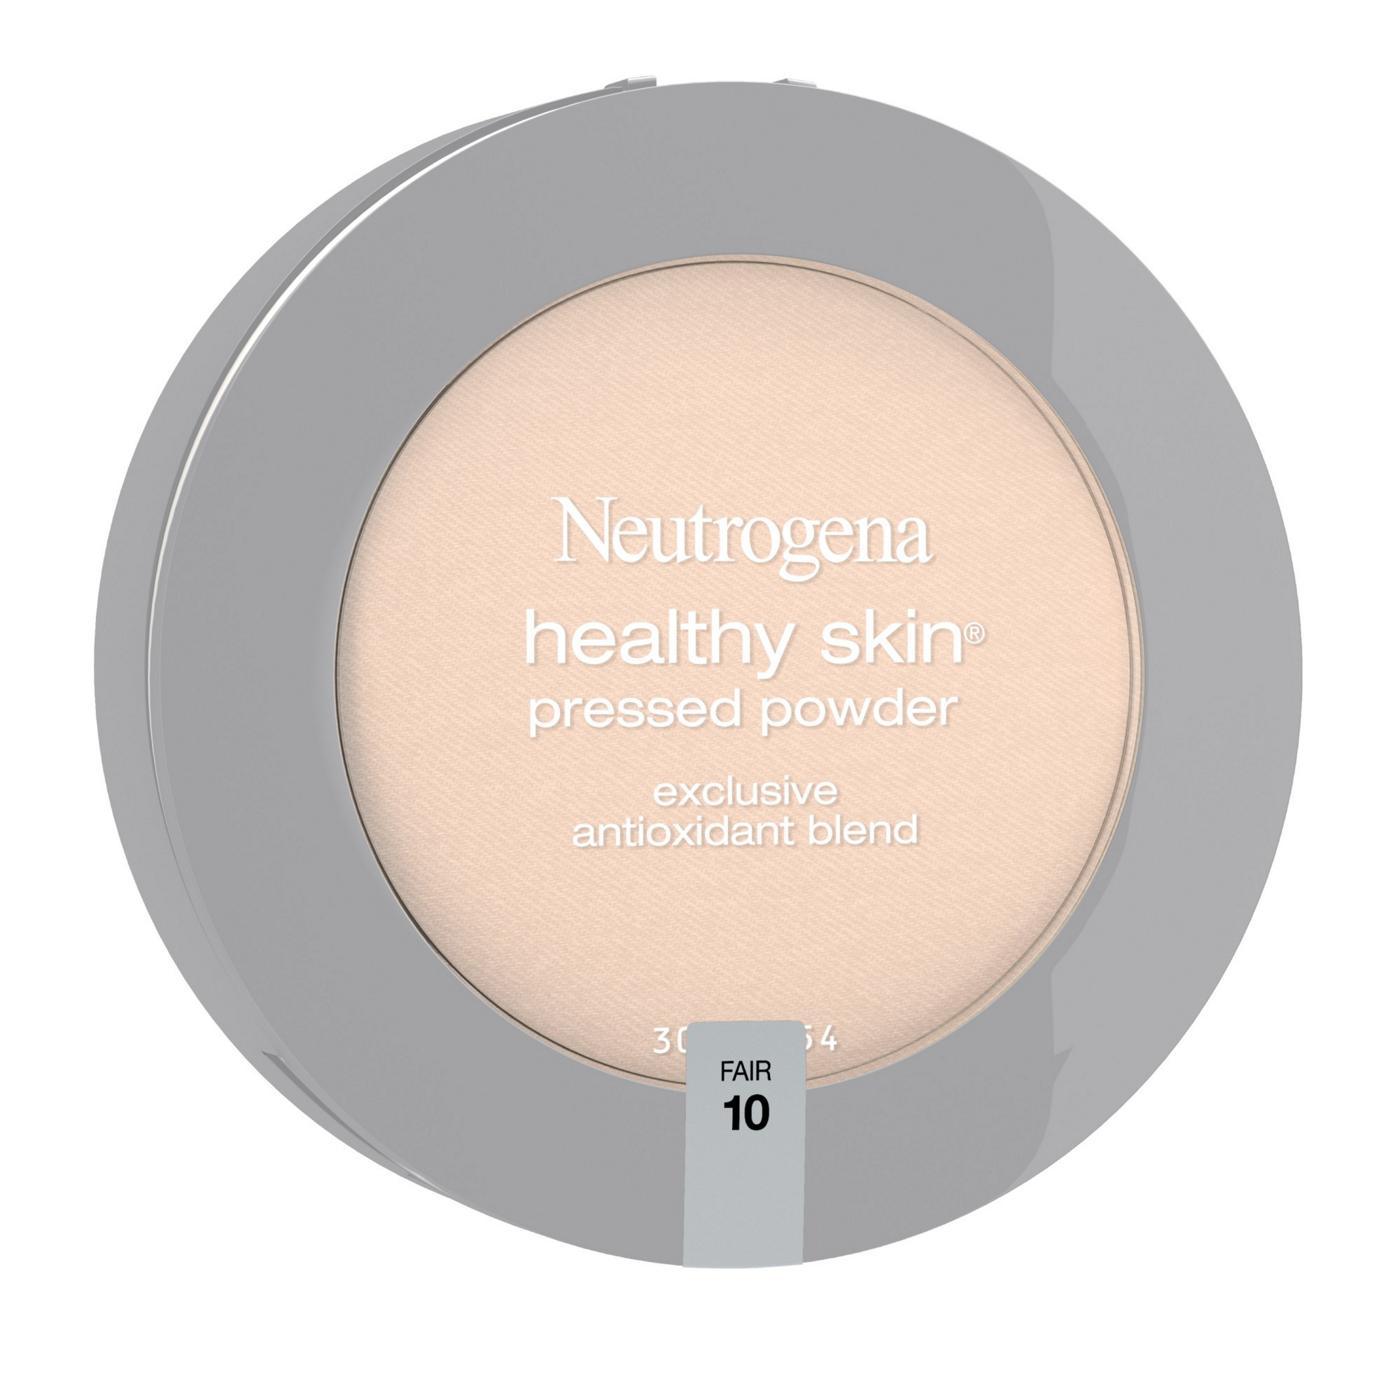 Neutrogena Healthy Skin Pressed Powder 10 Fair; image 4 of 5